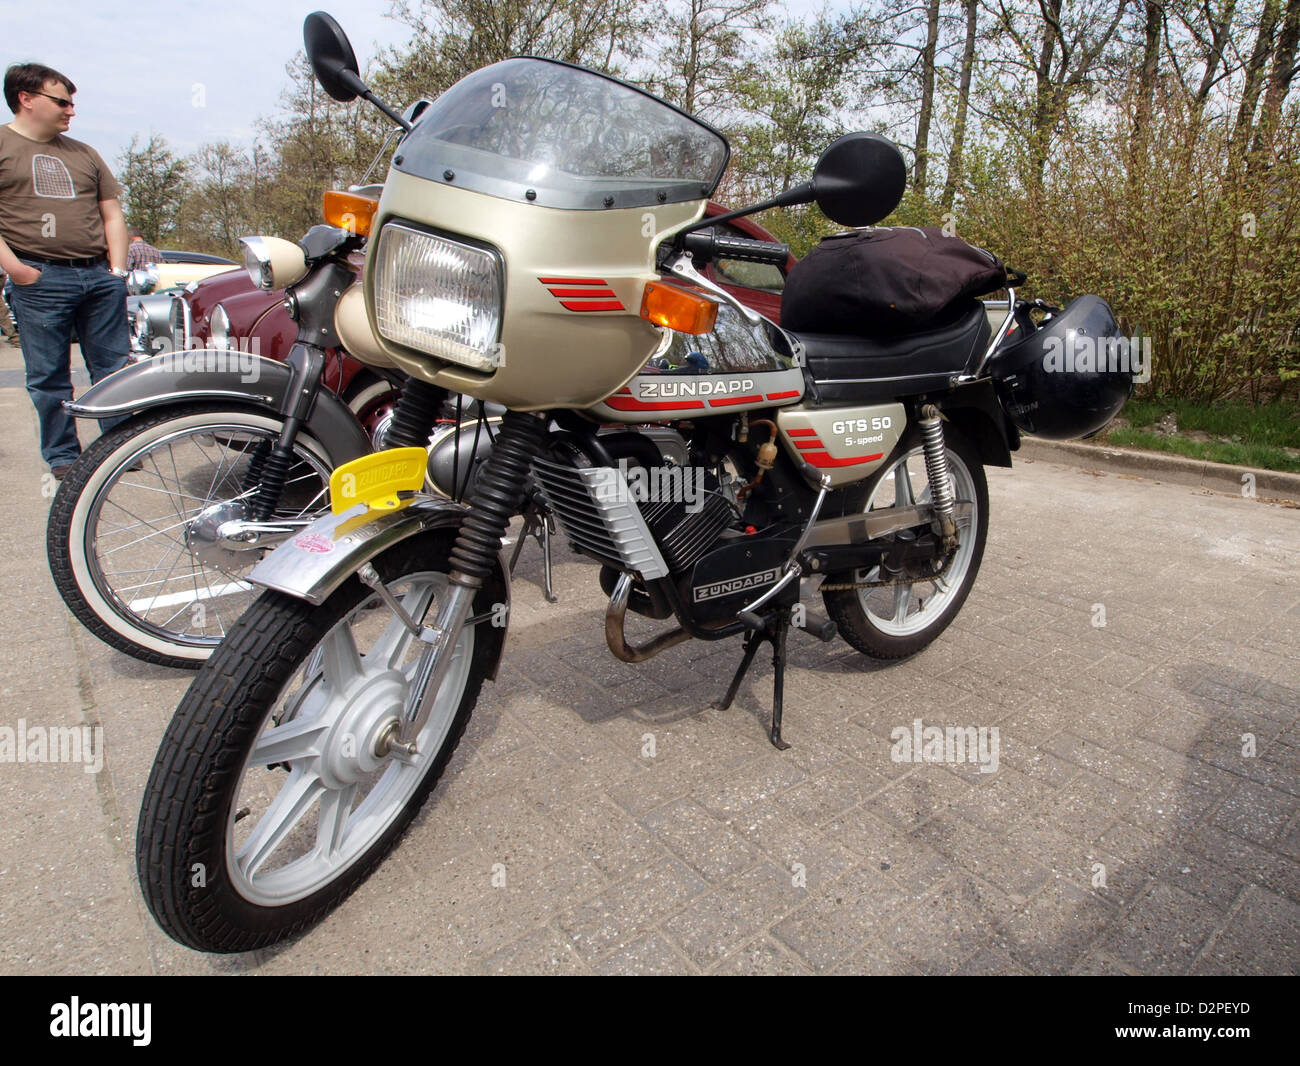 Zündapp motorcycles zundapp hi-res stock photography and images